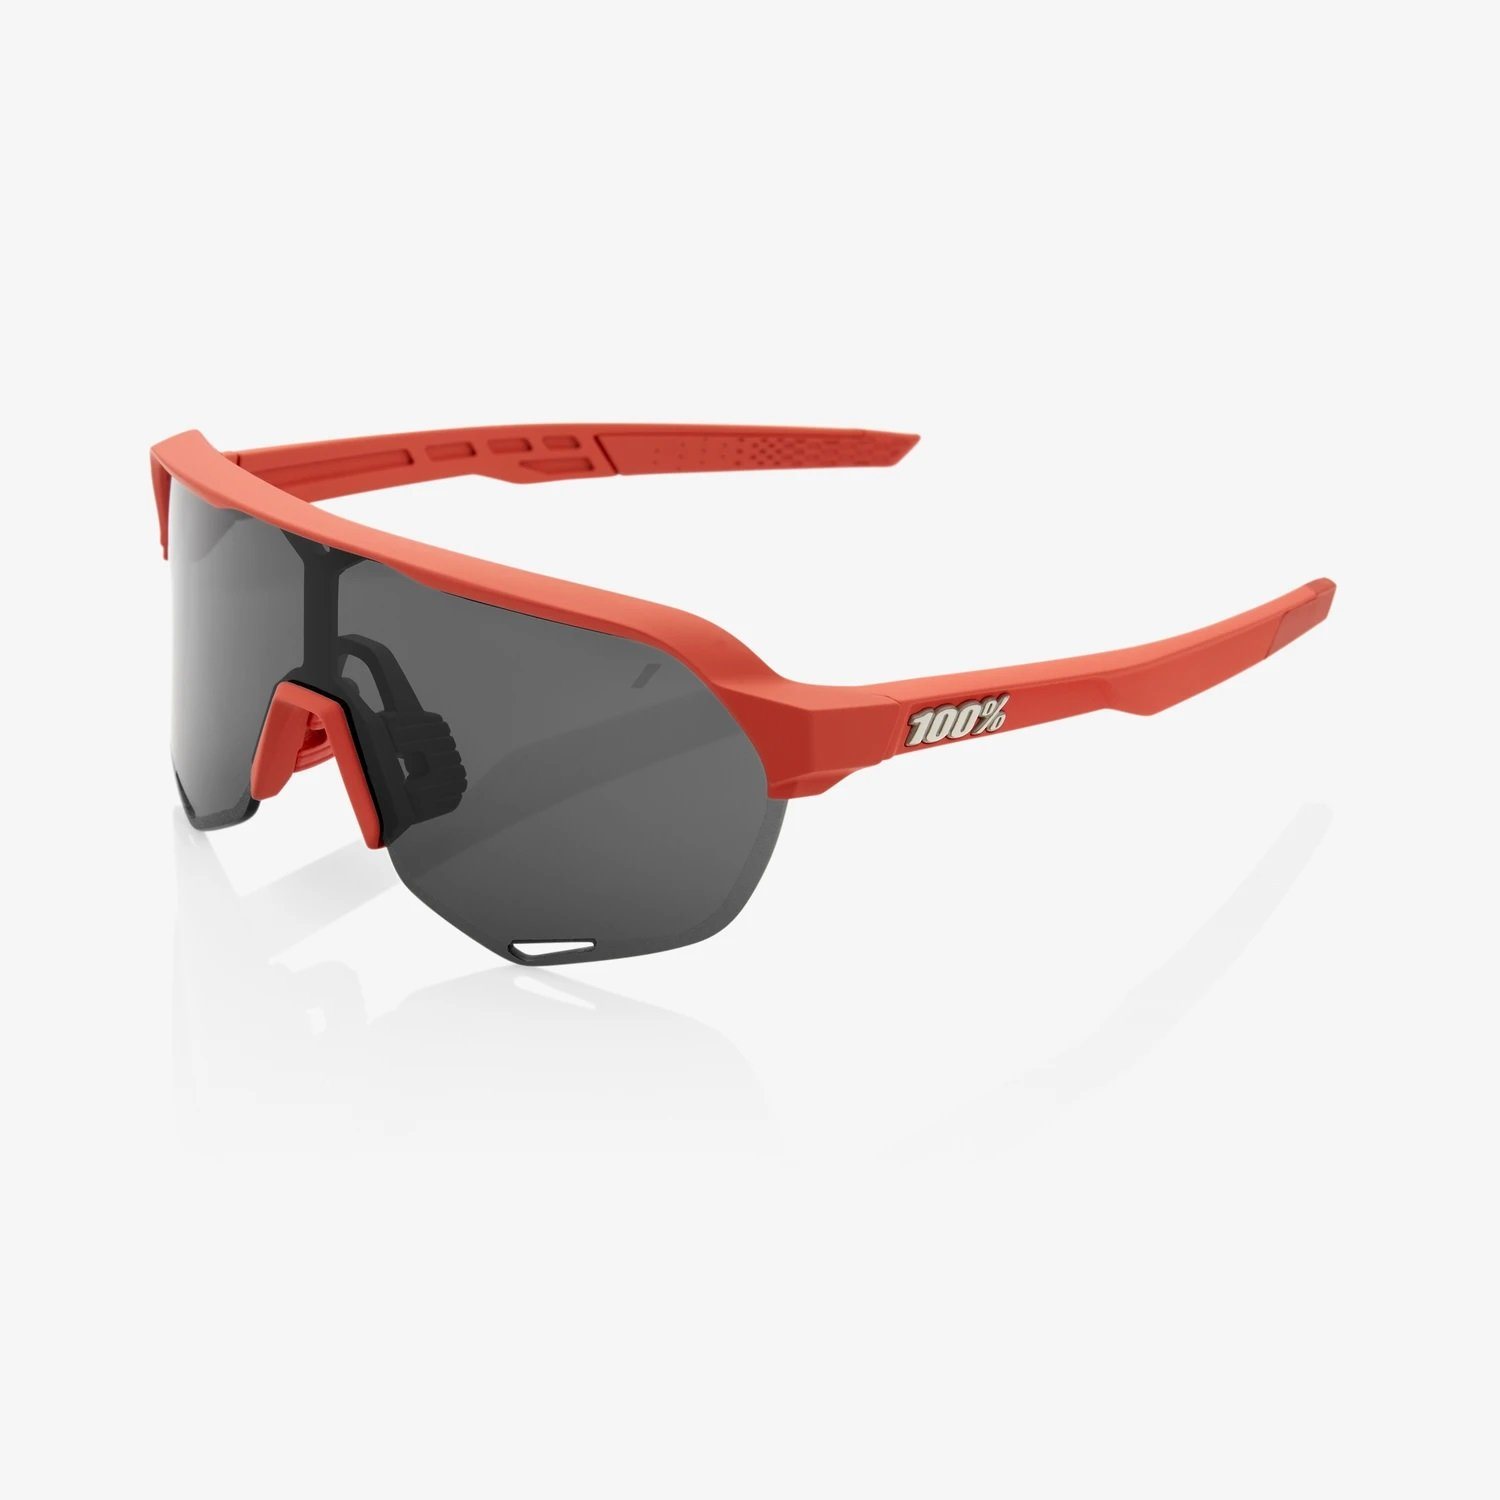 Sunglasses S2 | Soft Tact Coral - Smoke Lens Sunglasses 100% 